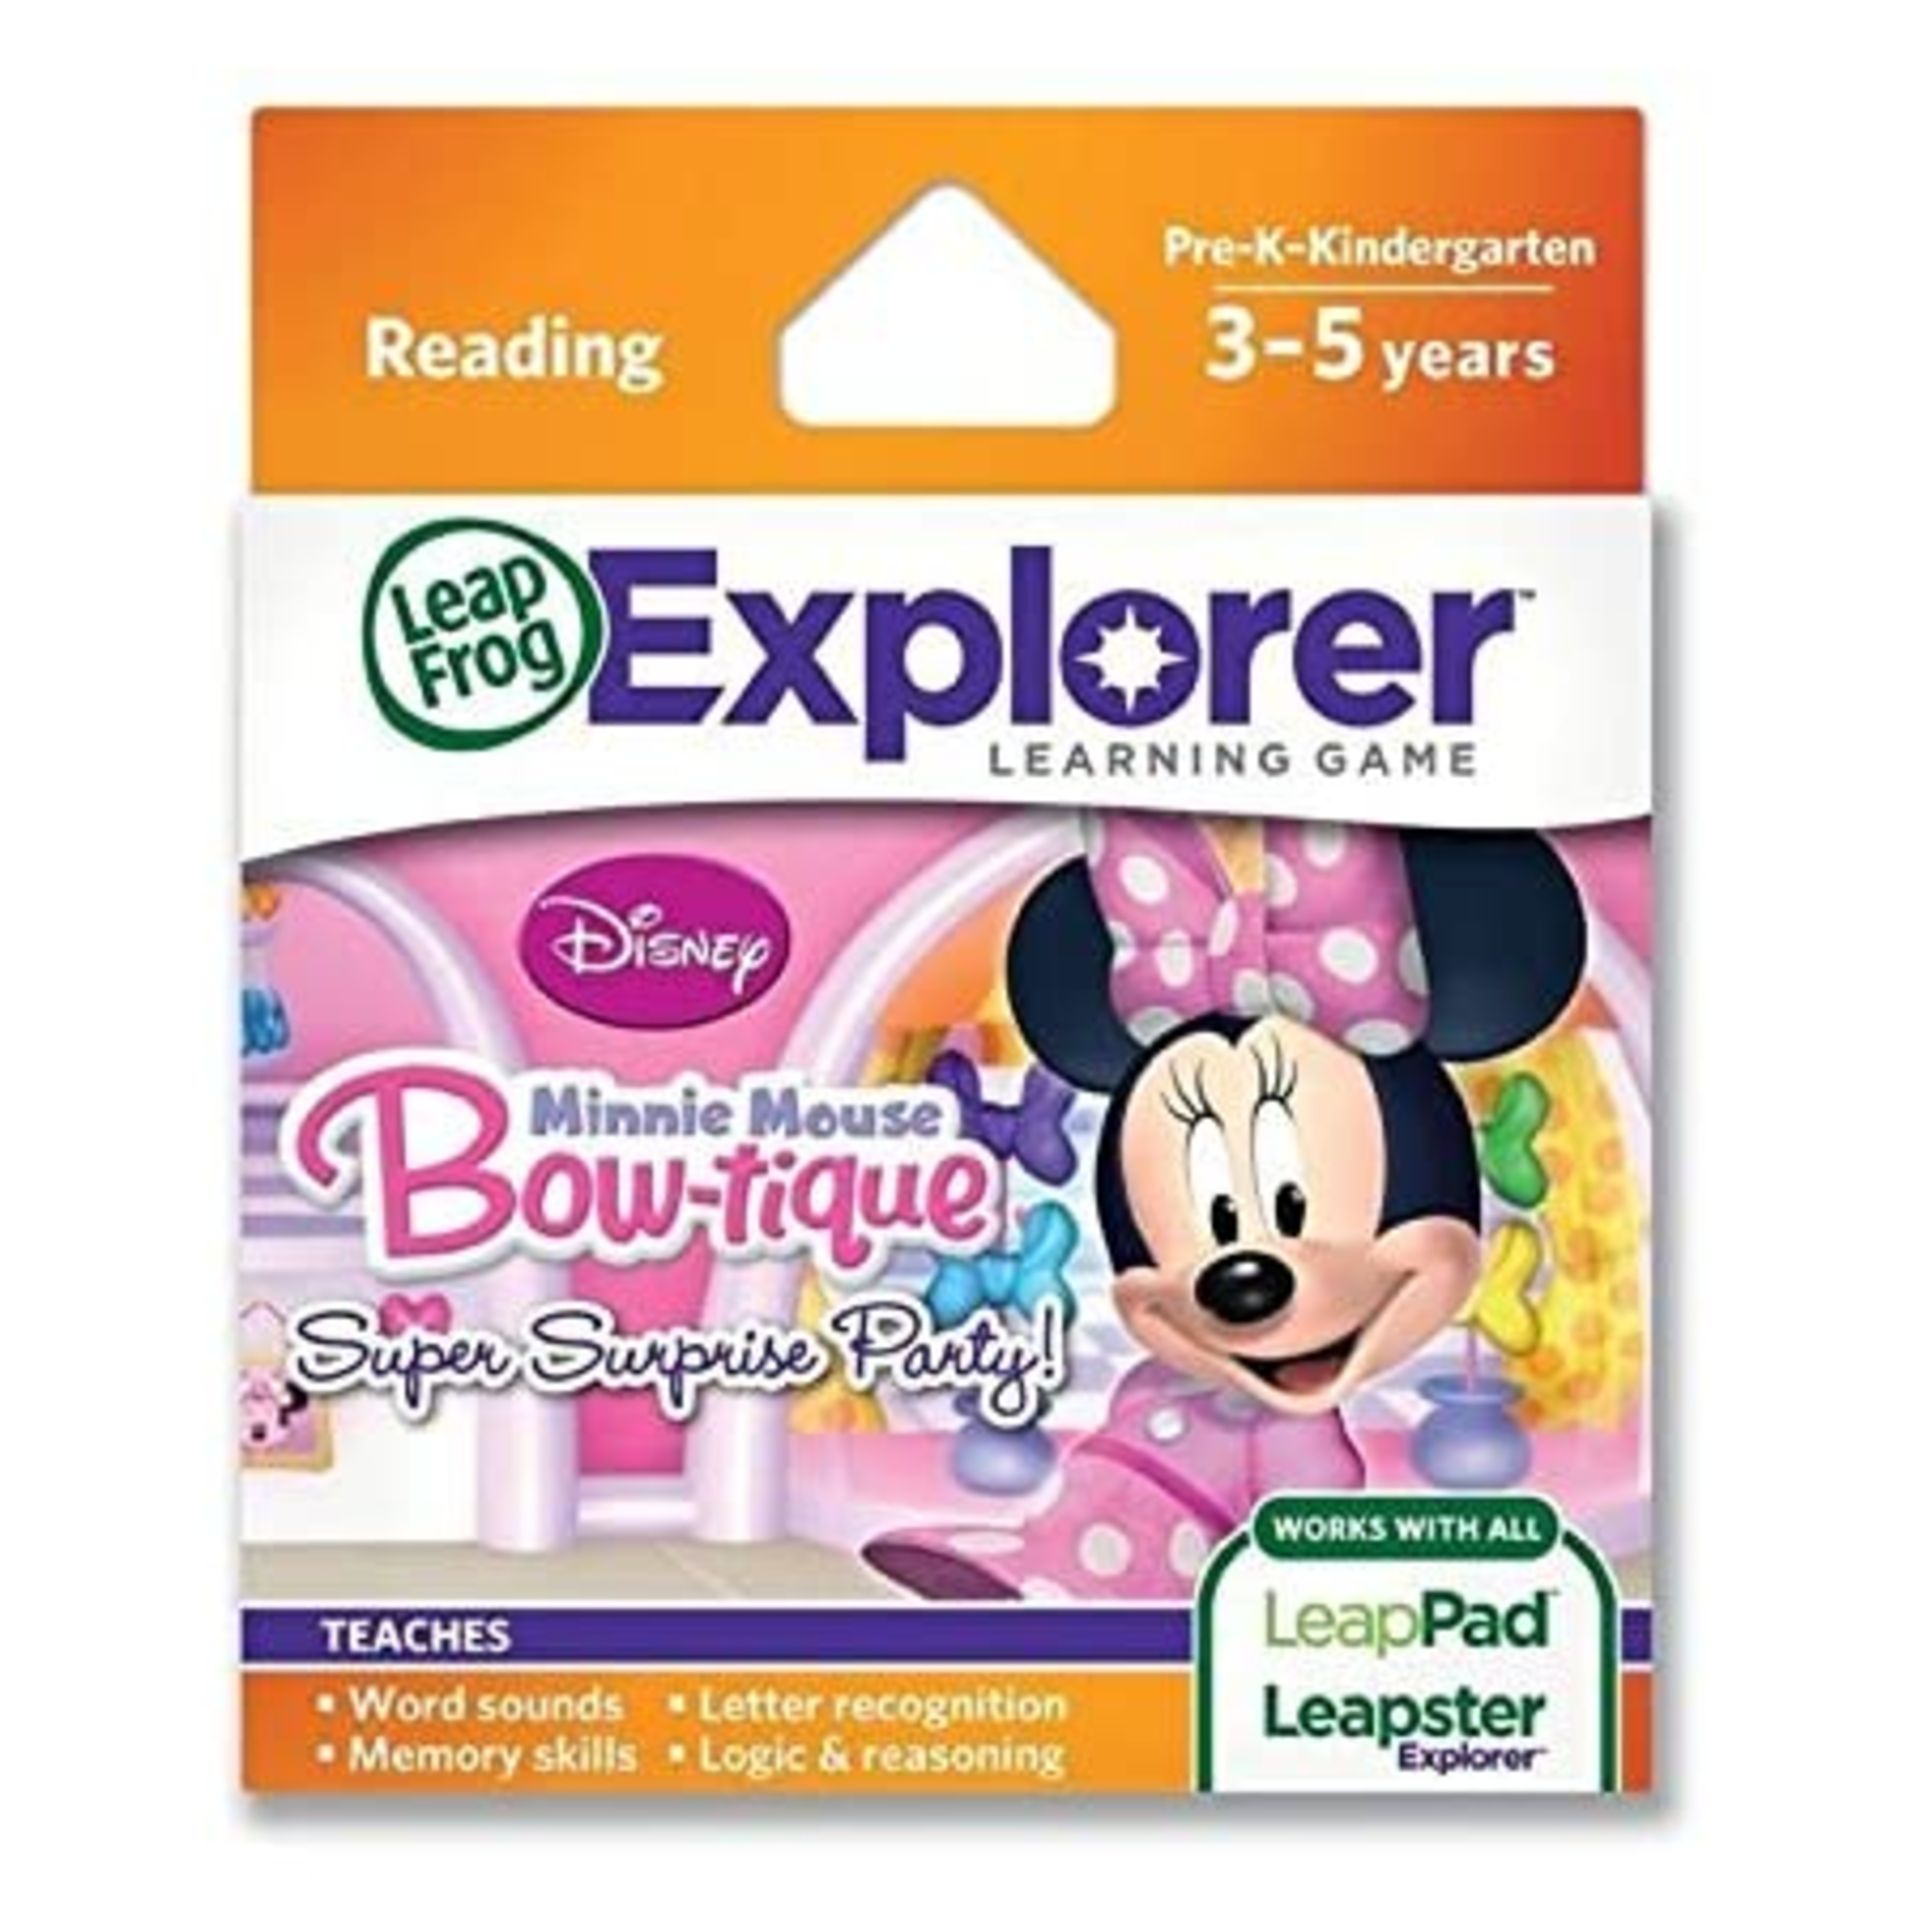 (R14E) 8x Leap Frog Explorer Learning Game Reading – Disney Minnie Mouse Bow-tique Super Surprise P